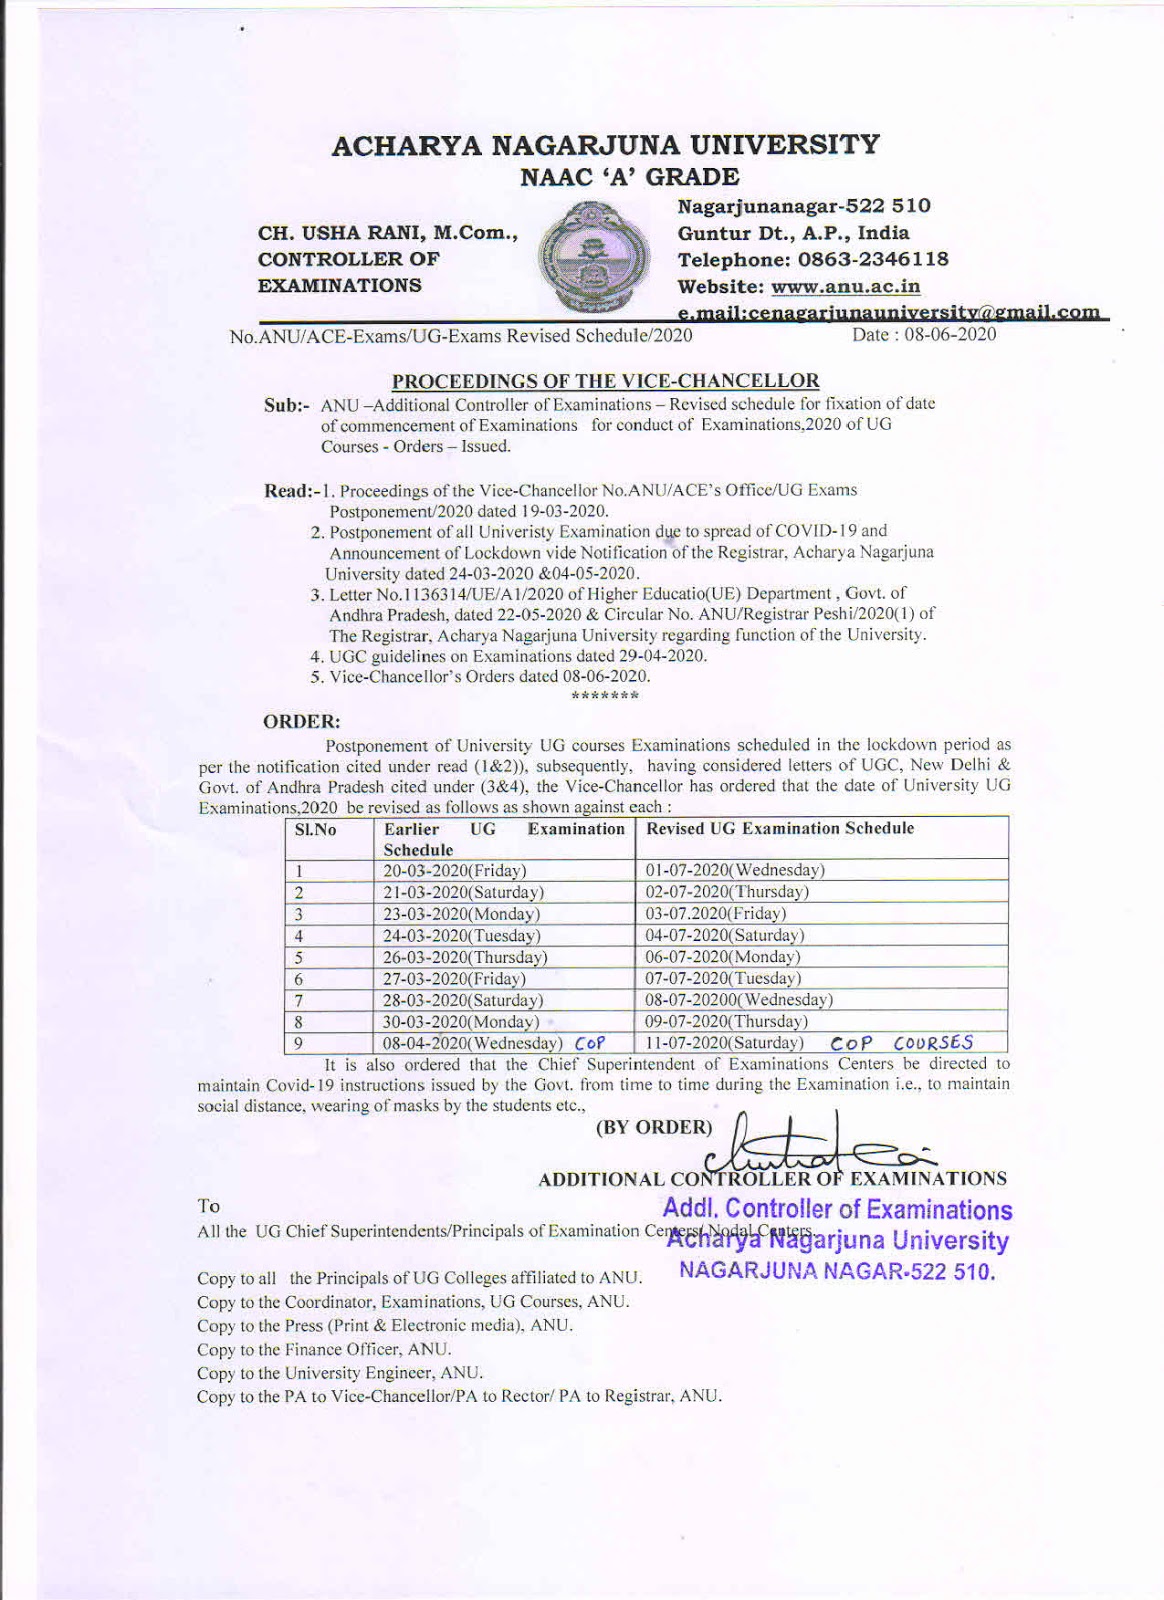 acharya nagarjuna university ug courses 2020 date fix for exam notification